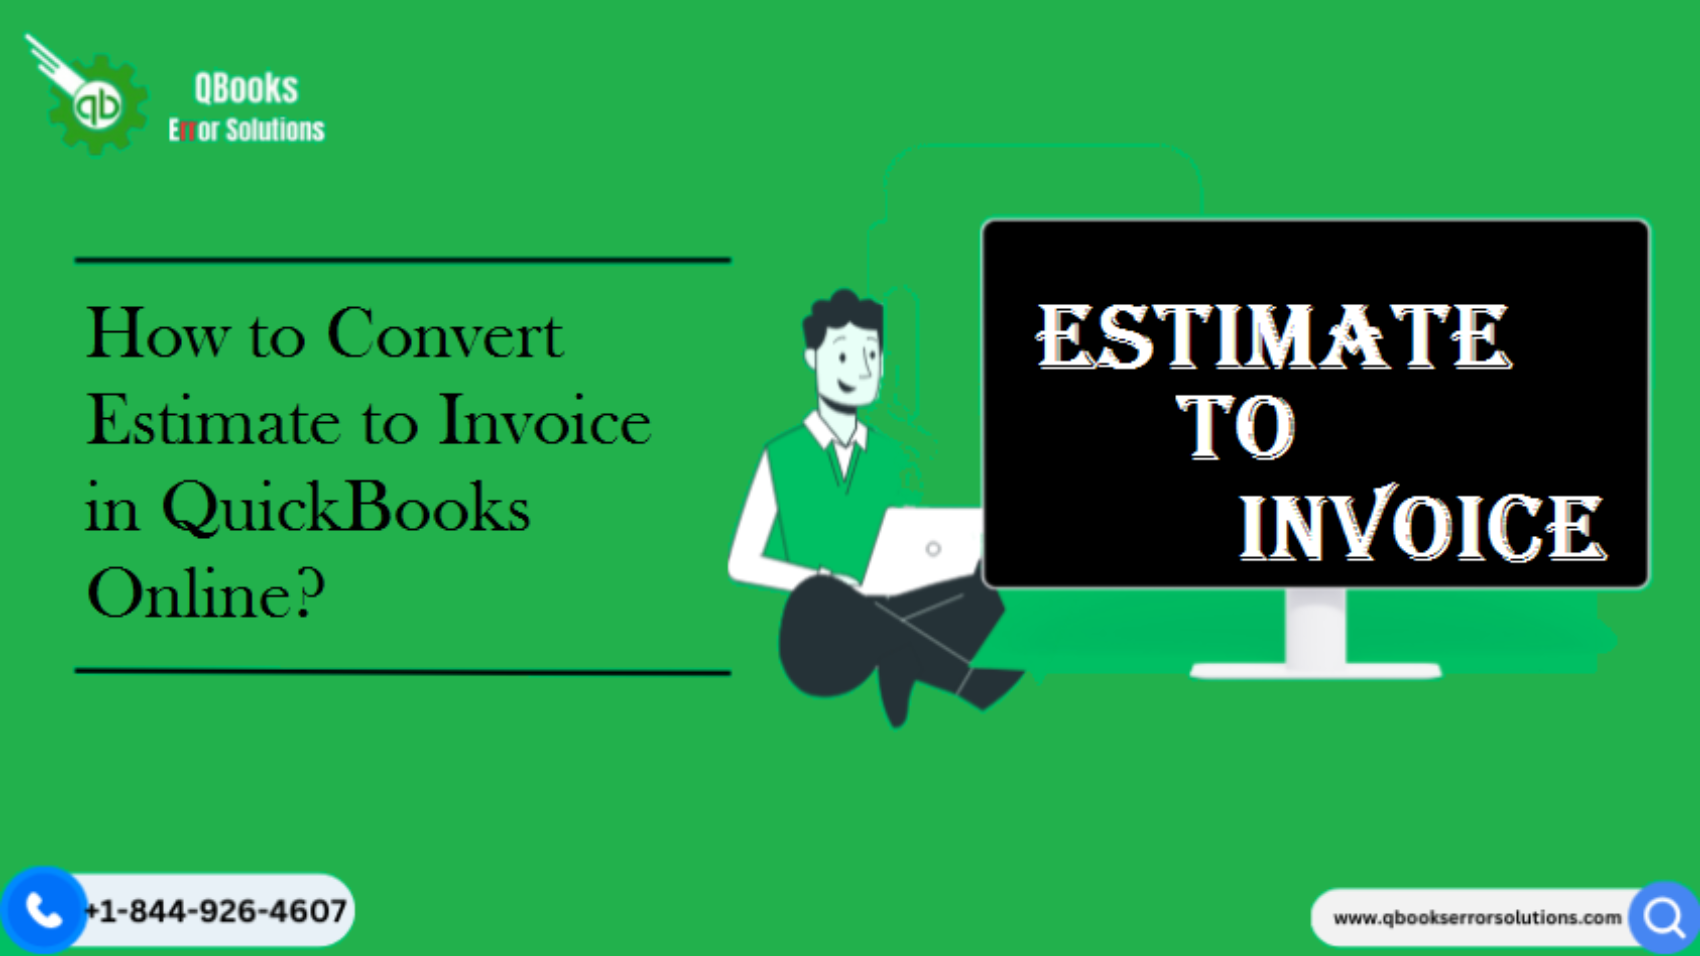 How to Convert Estimate to Invoice in QuickBooks Online